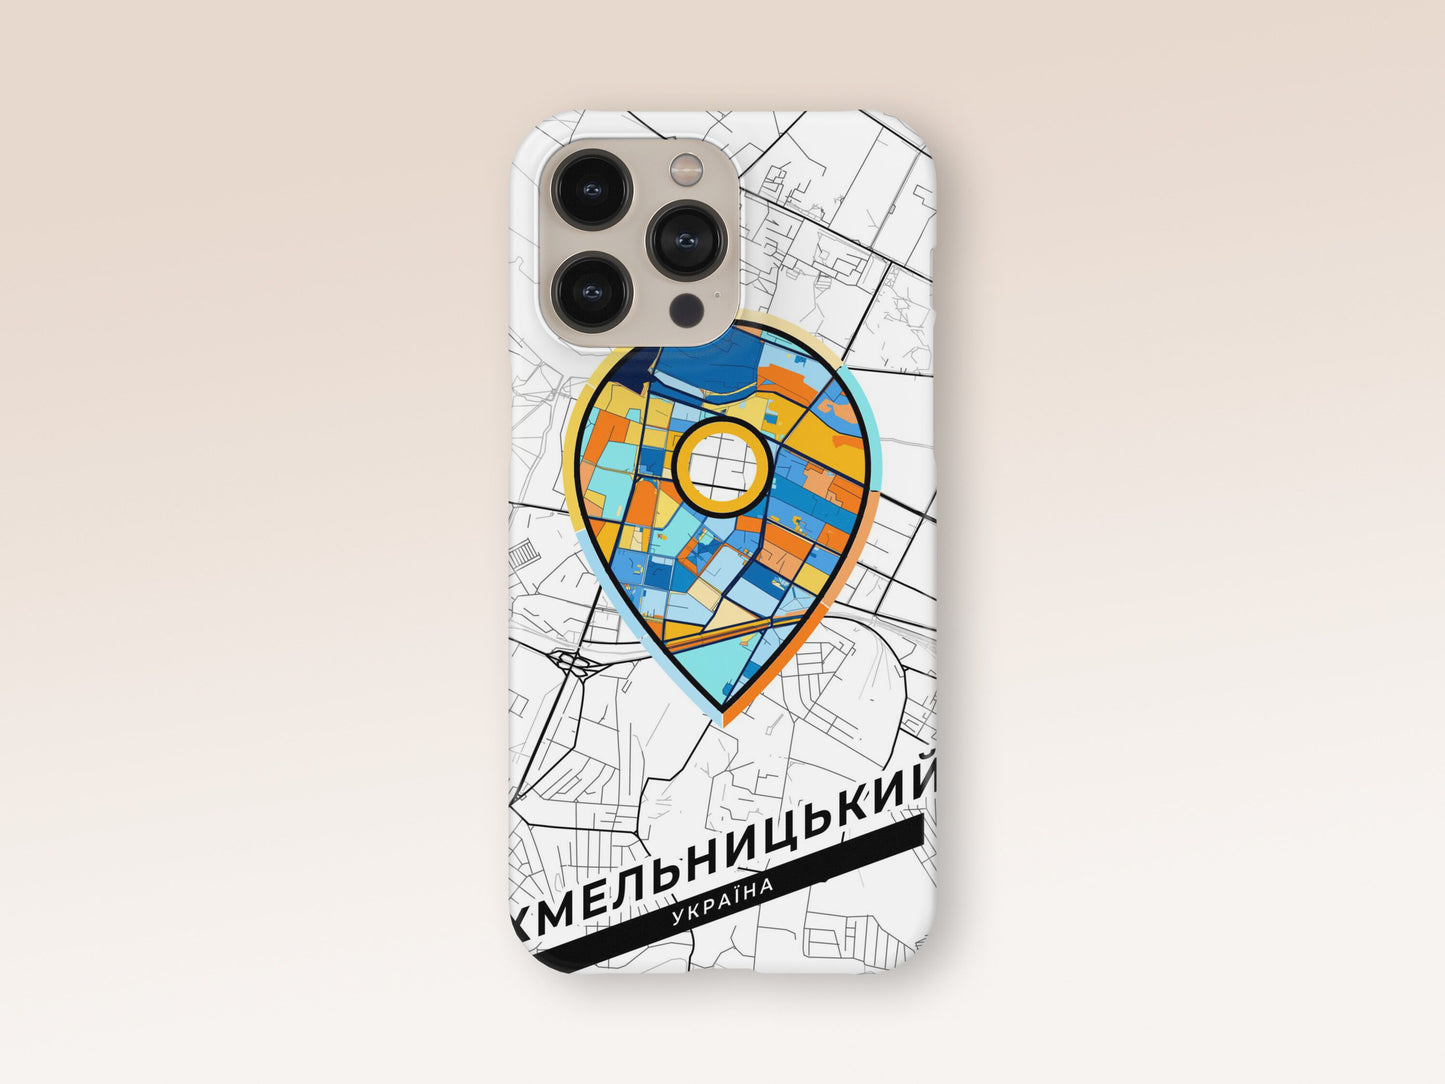 Khmelnytskyi Ukraine slim phone case with colorful icon. Birthday, wedding or housewarming gift. Couple match cases. 1